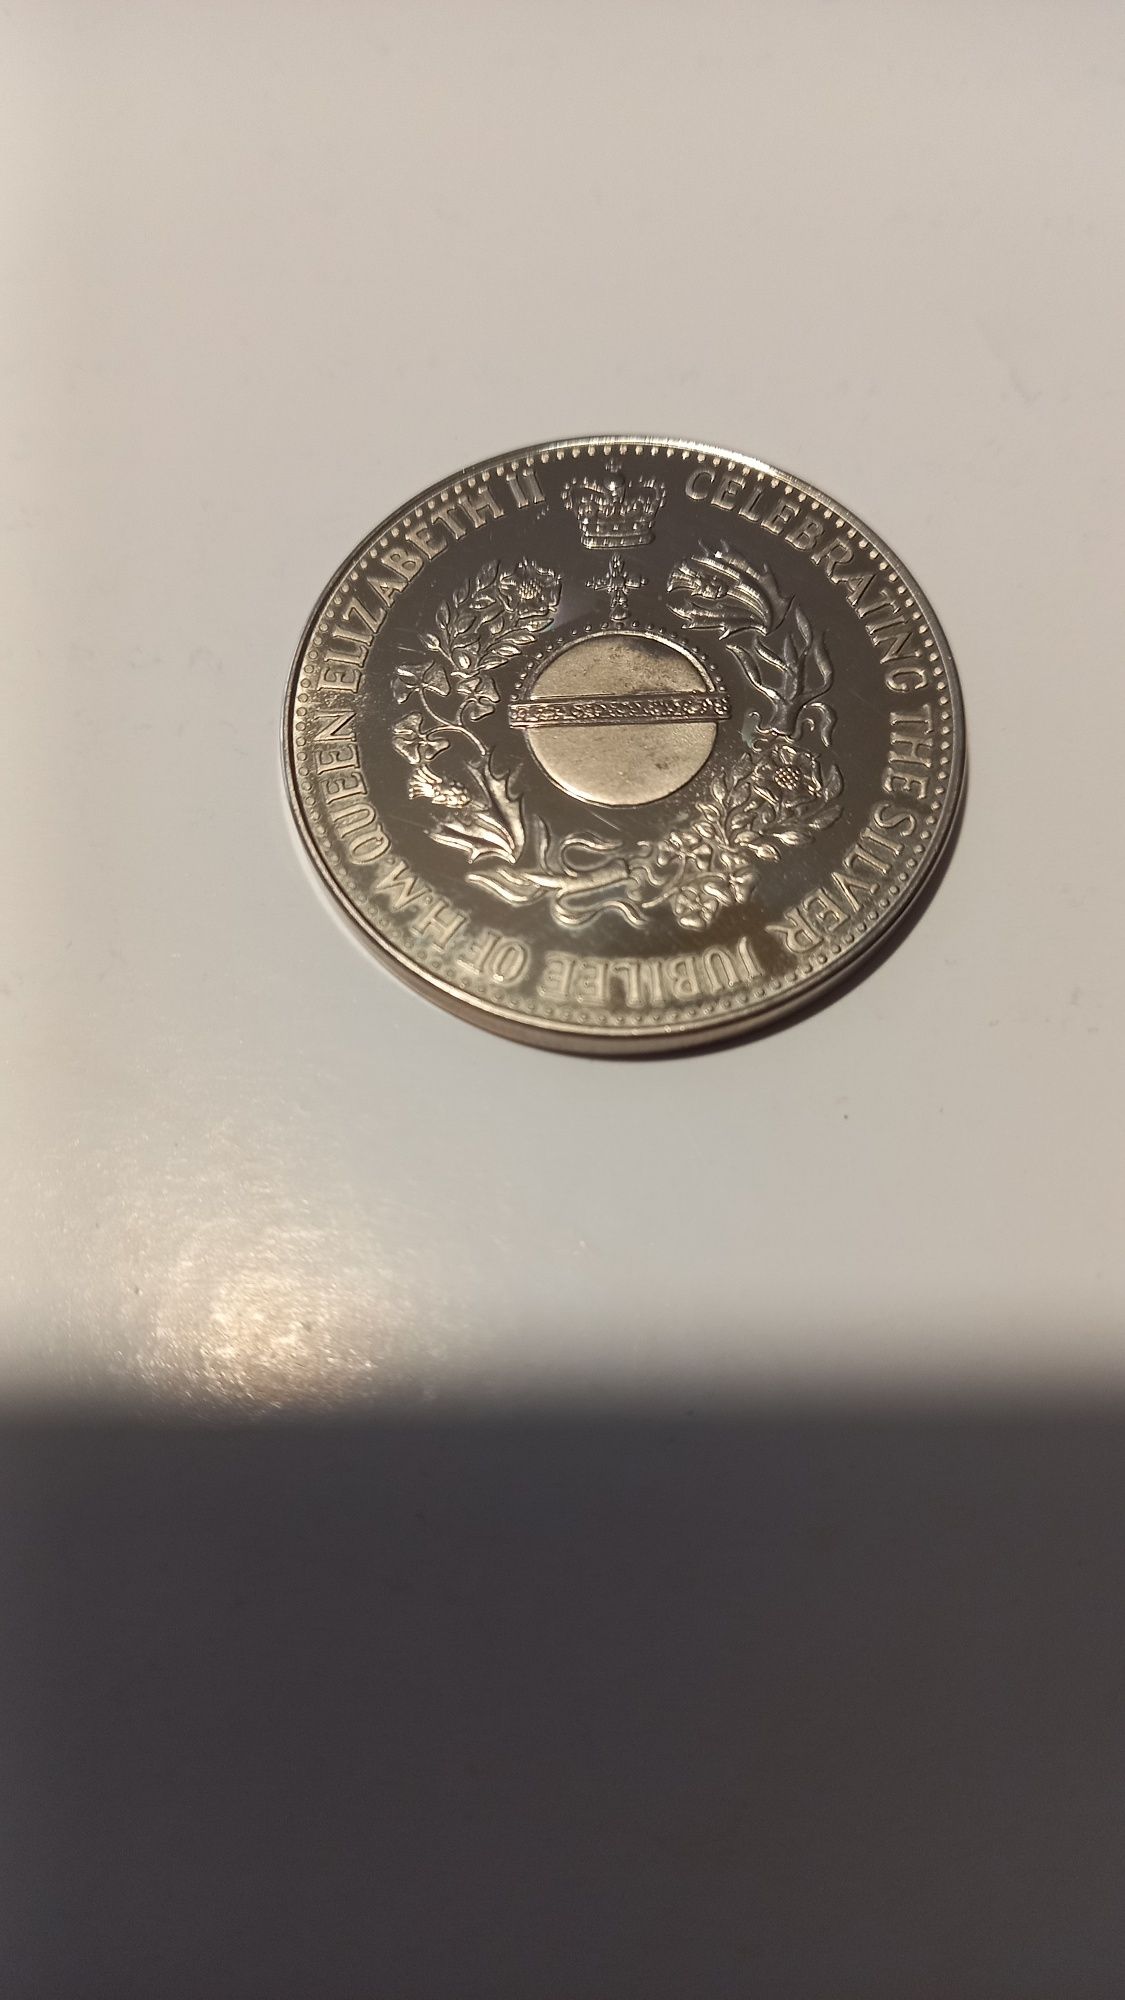 Юбилейная редкая Queen Elizabeth ll jubilee crown coin 1952-1977 silve